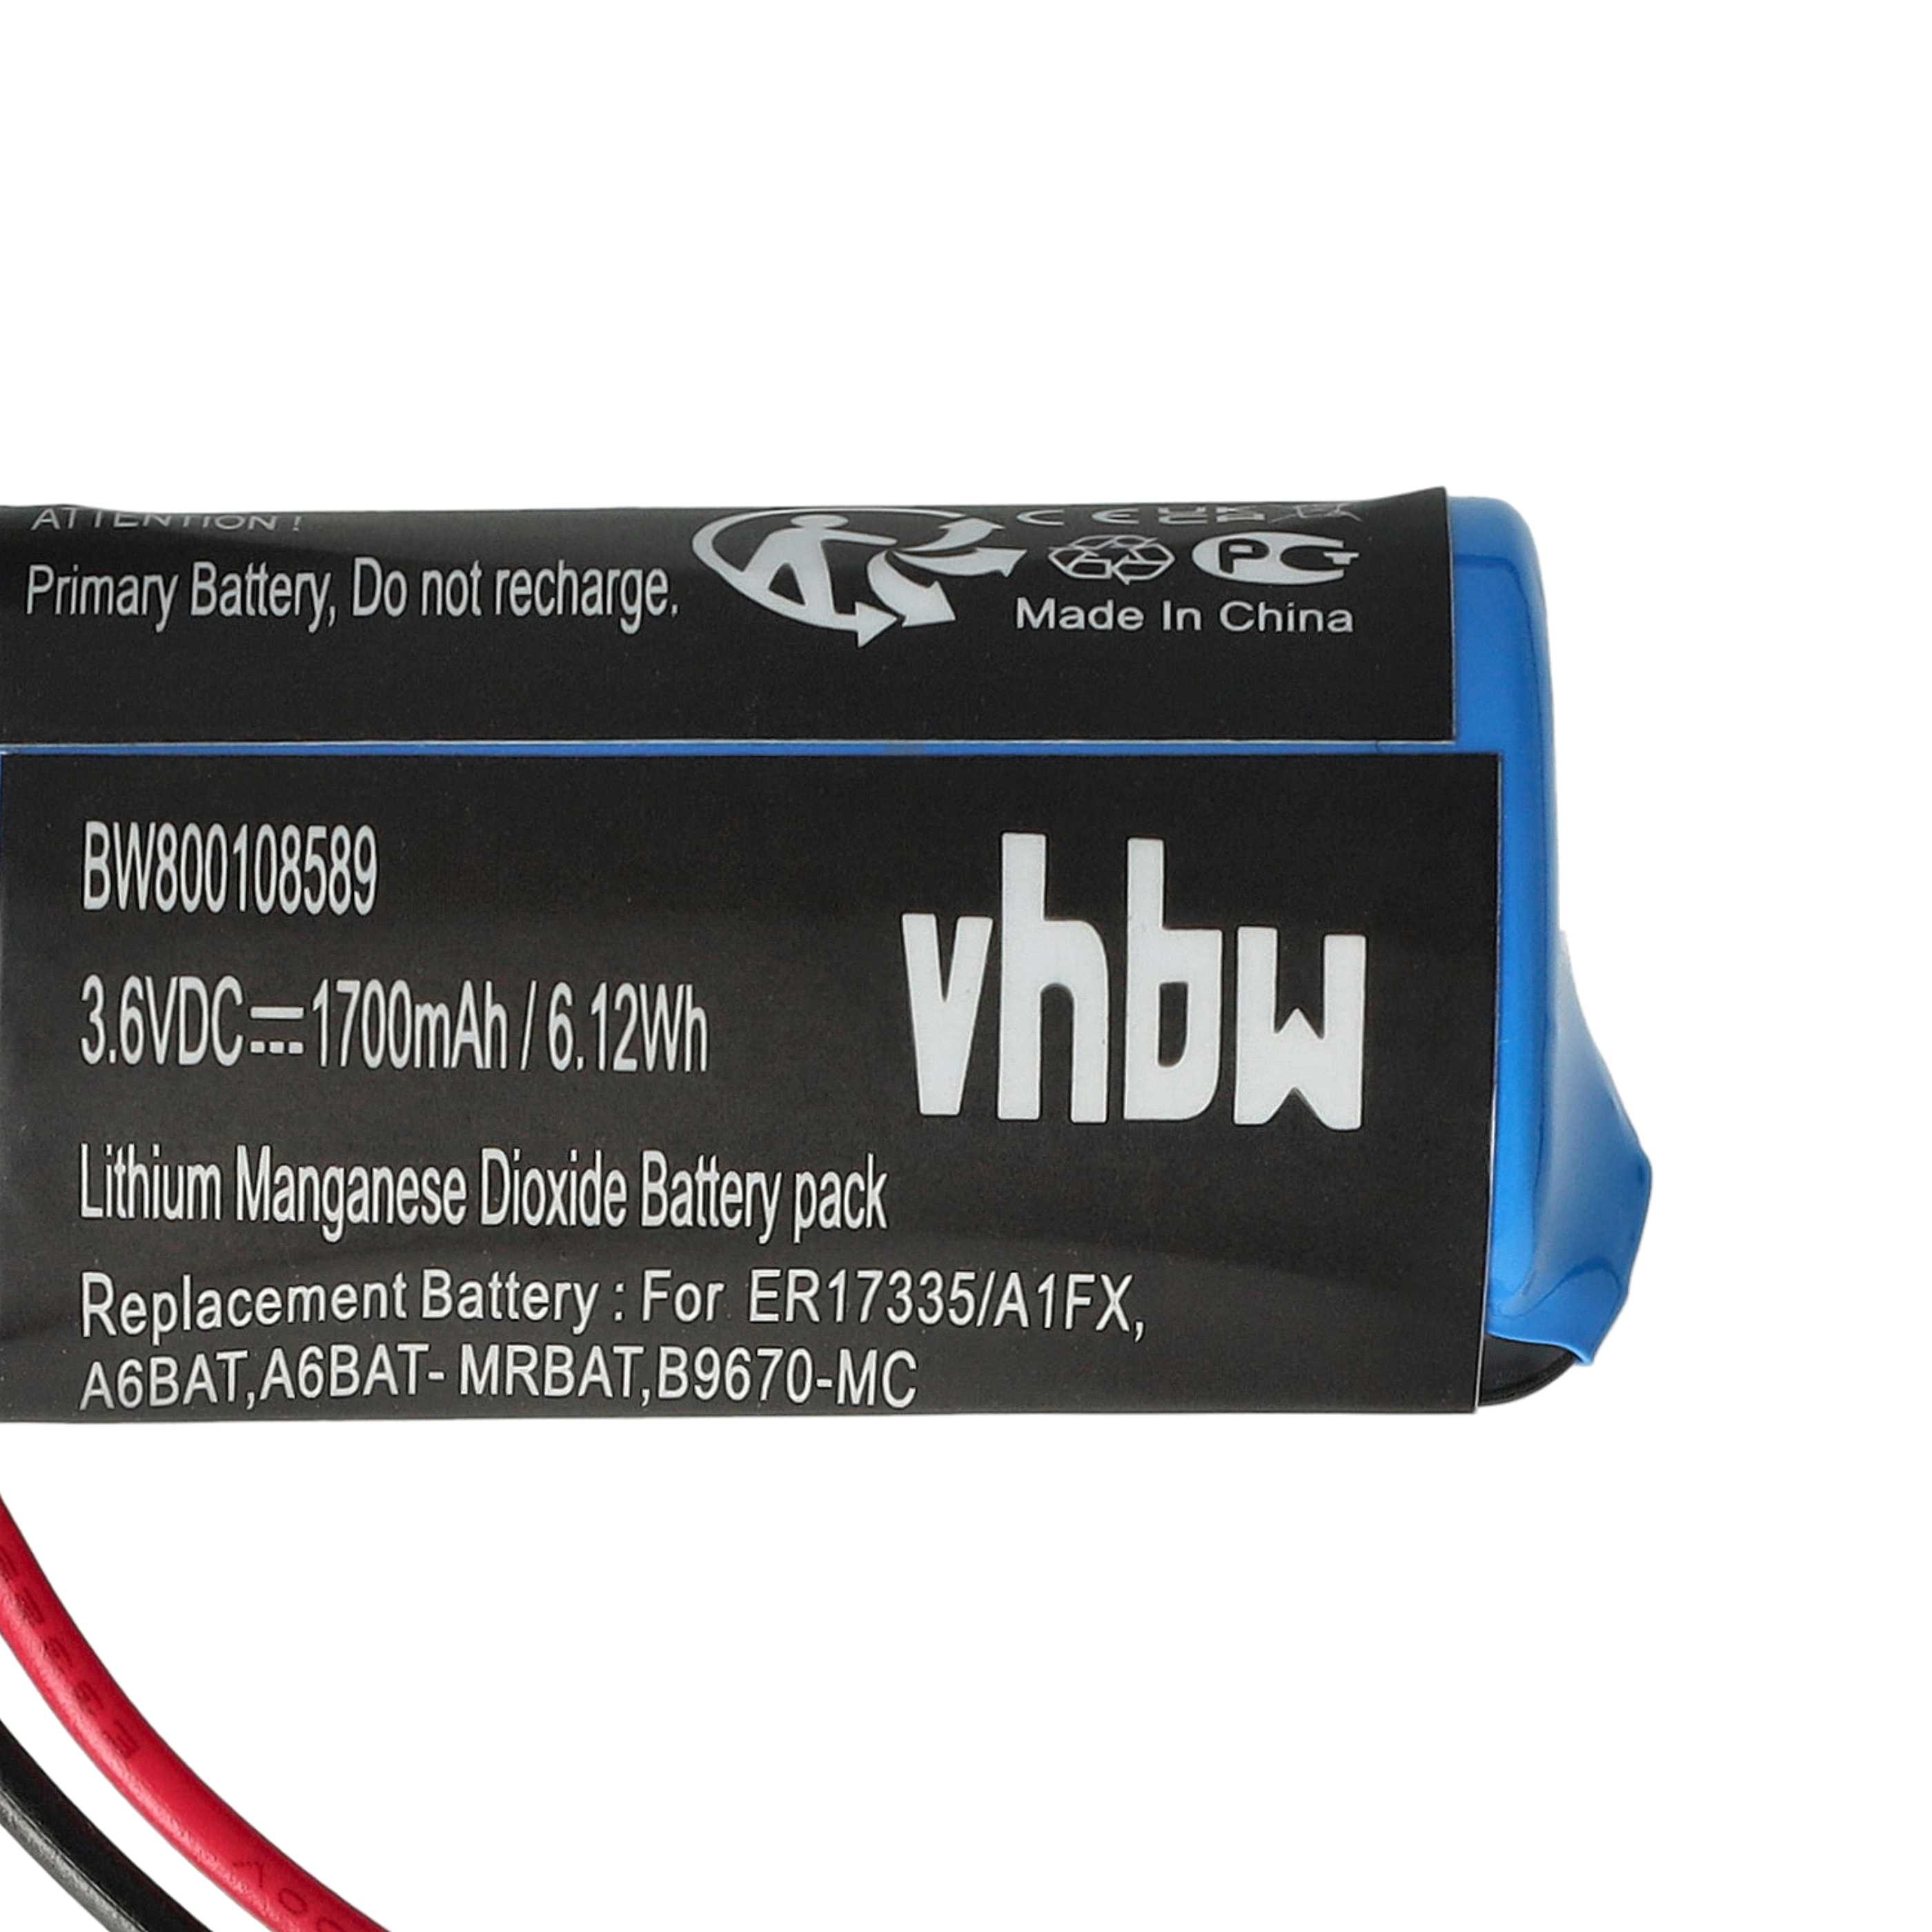 Batterie als Ersatz für B9670-MC für Mitsubishi - 1700mAh 3,6V Li-Ion